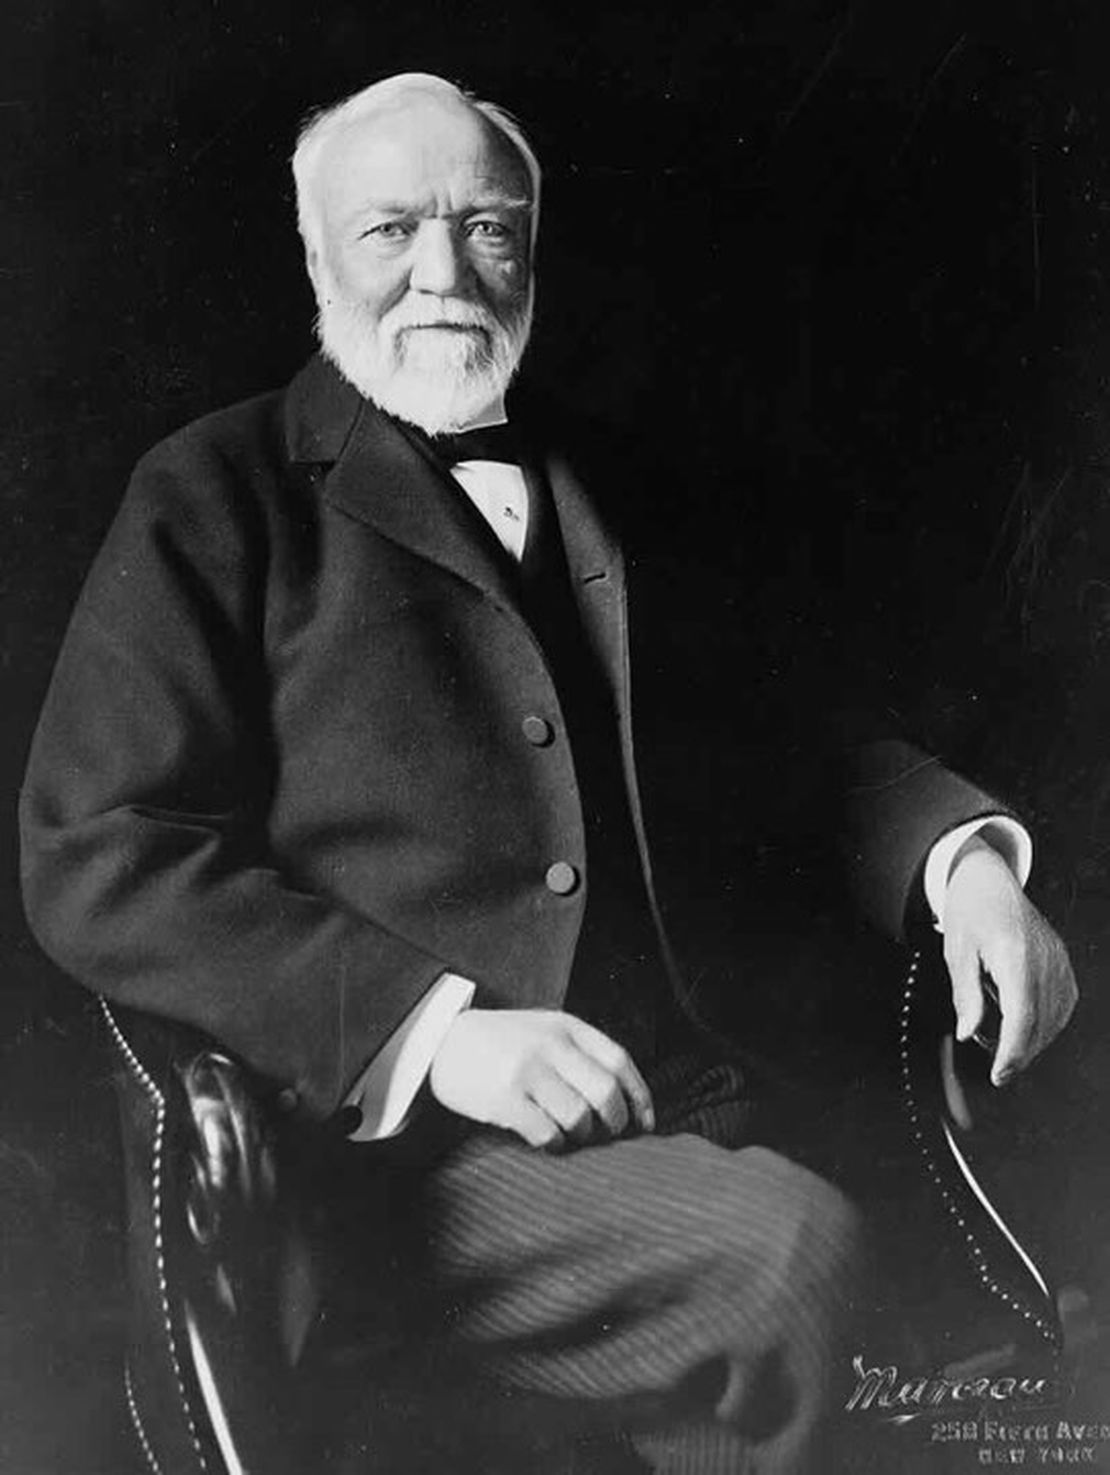 Andrew Carnegie, Steel magnate and philanthropist, born in Dunfermline Scotland